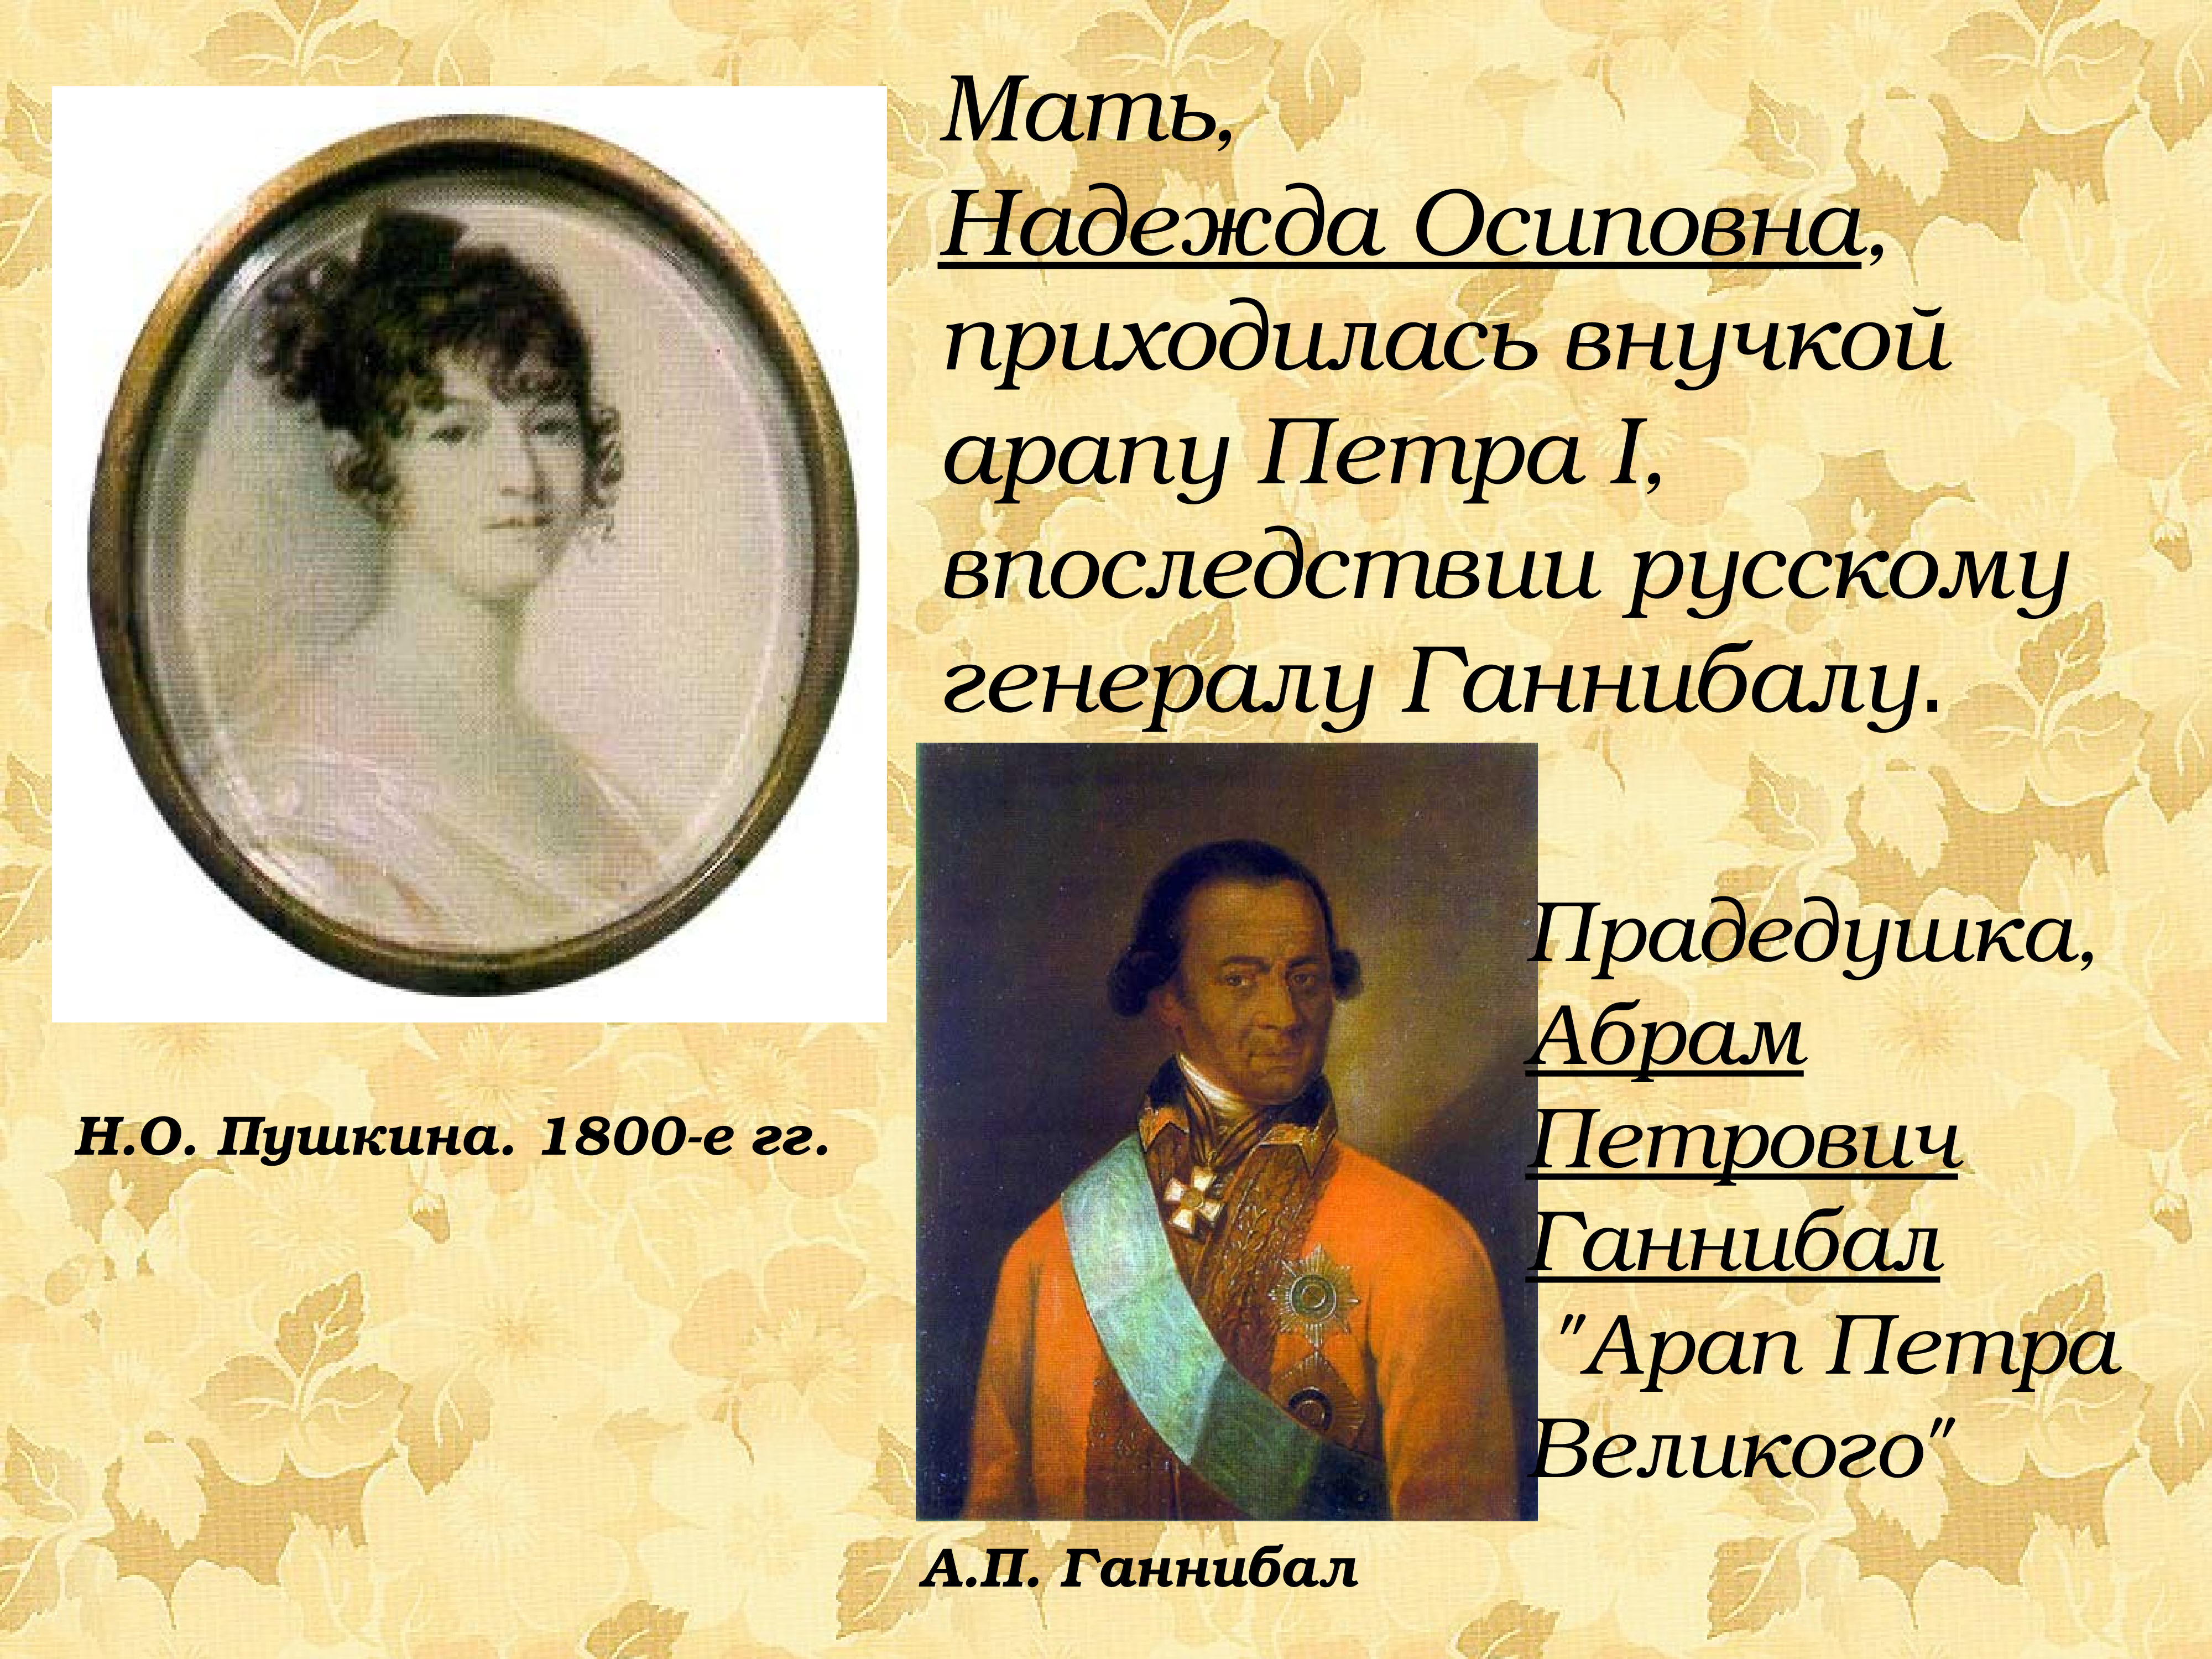 фото александра сергеевича пушкина для презентации